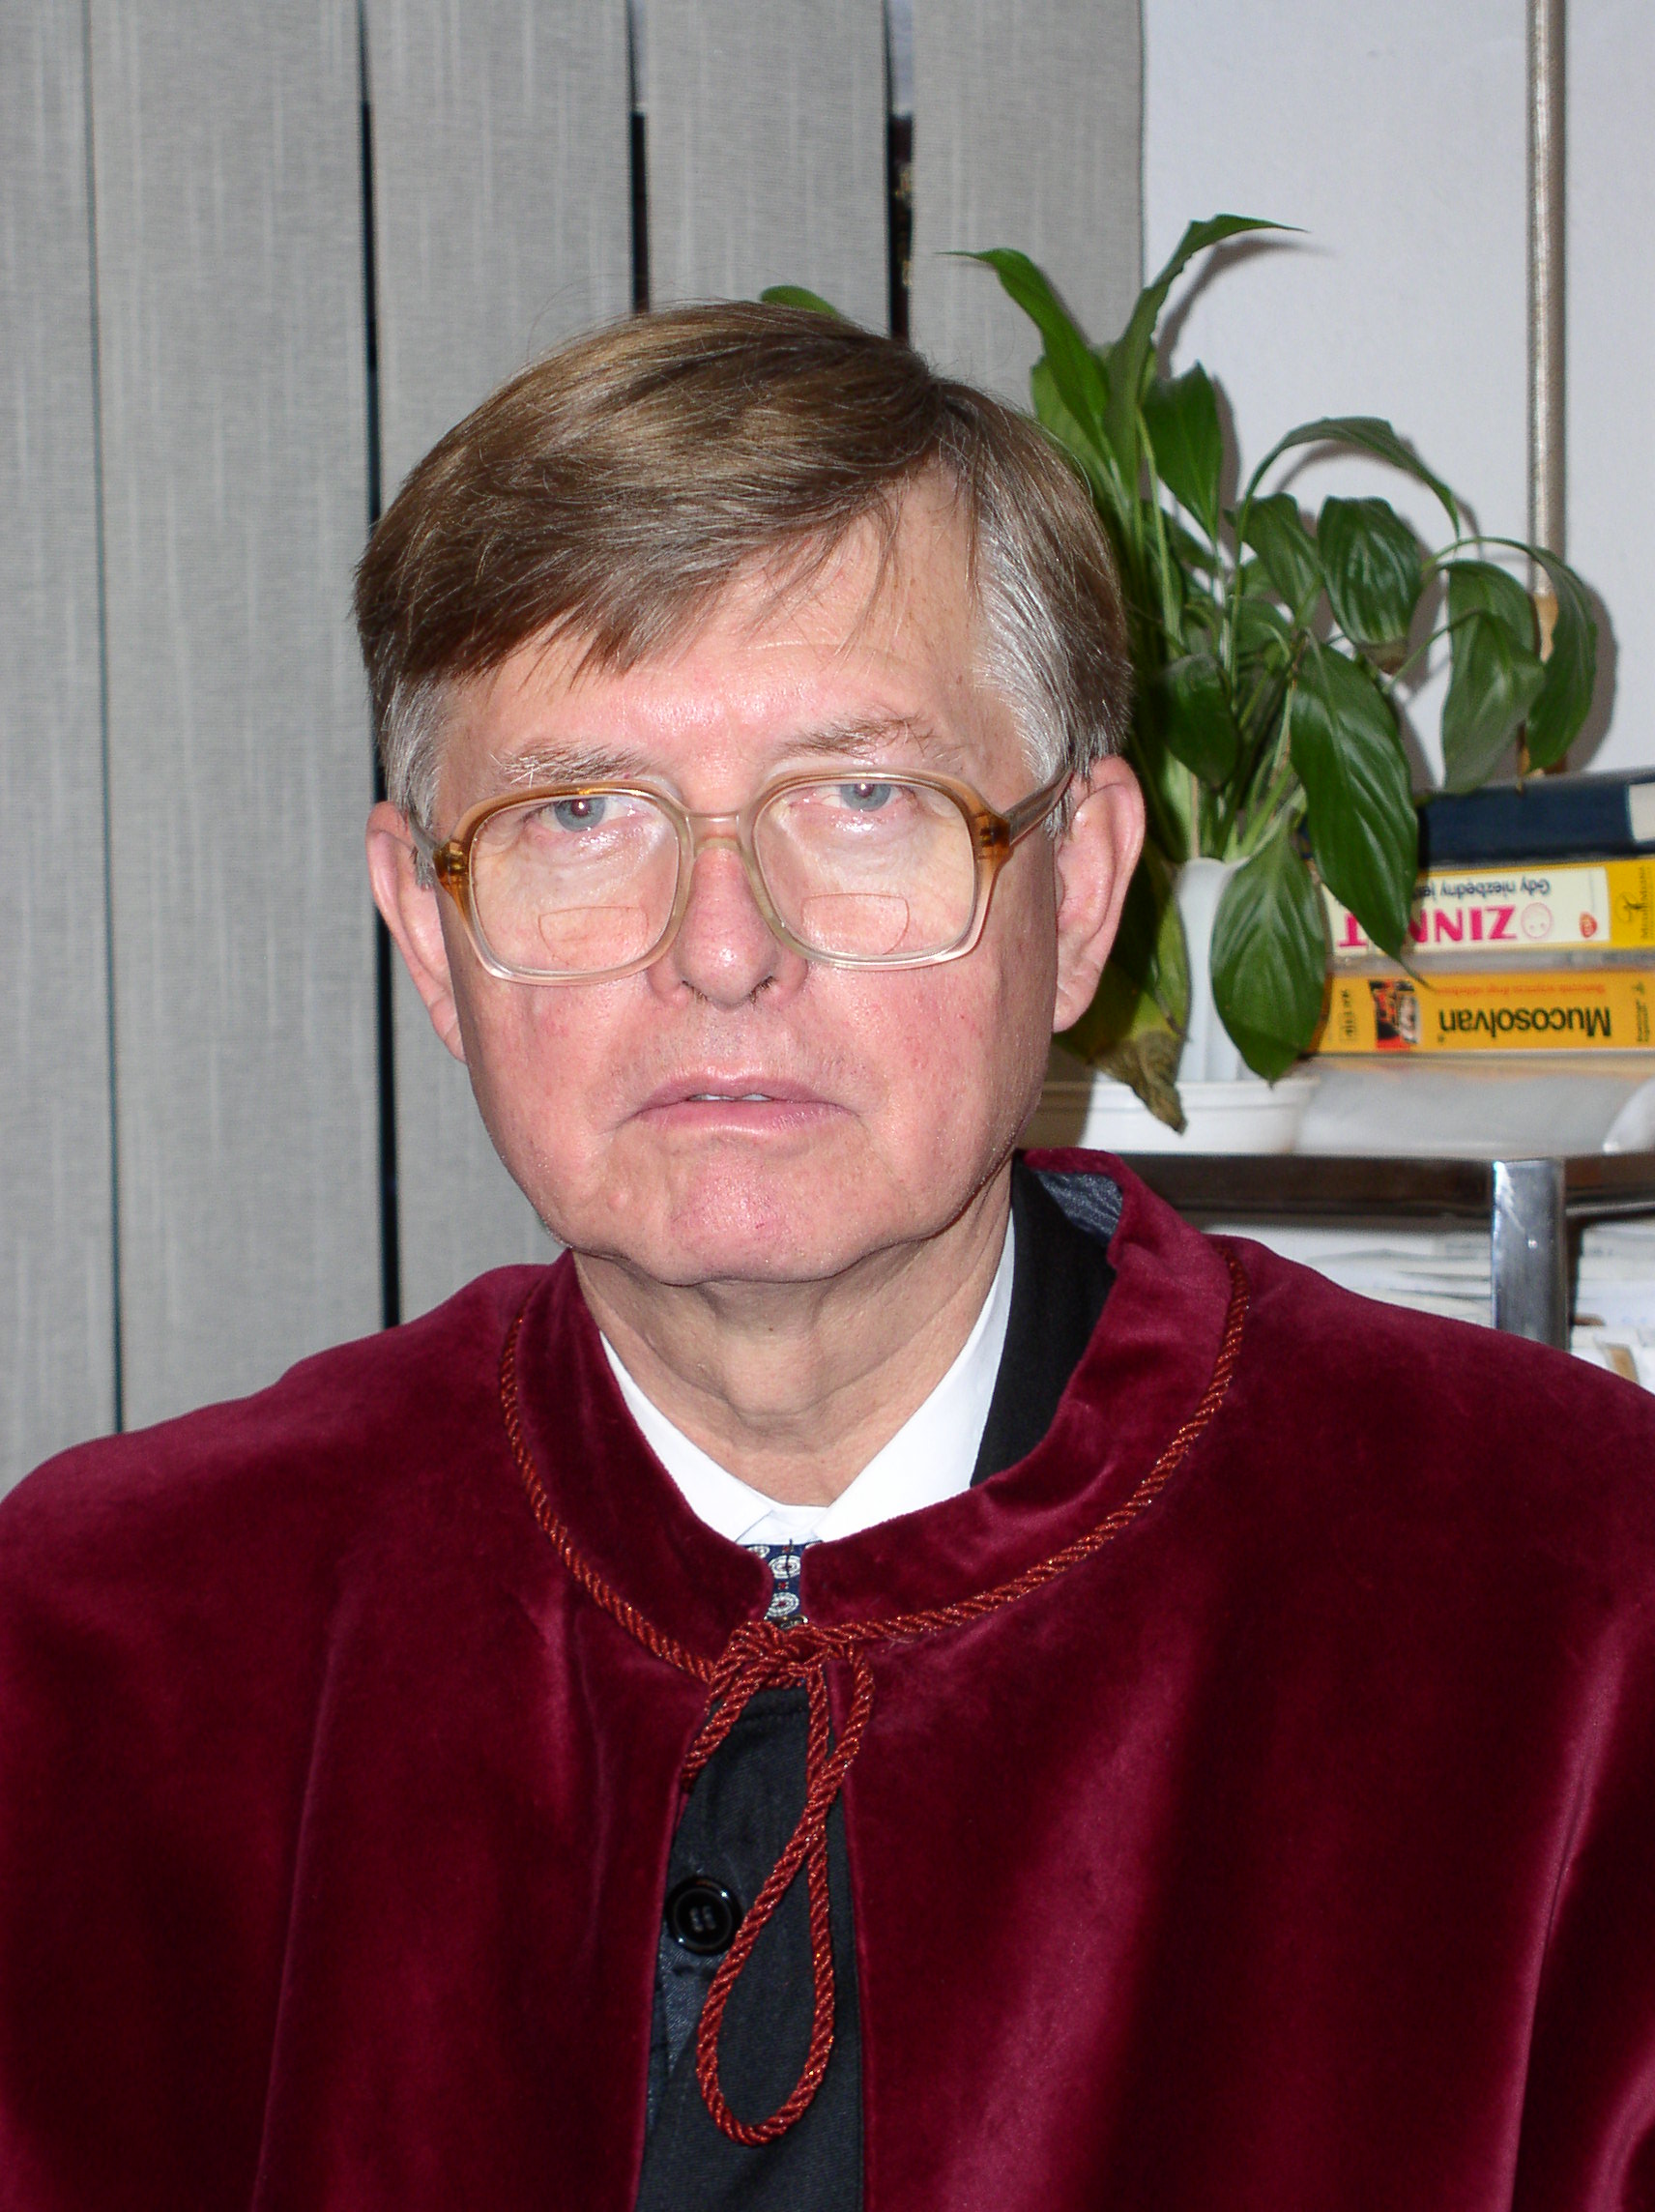 Dr. Tomasz Karski